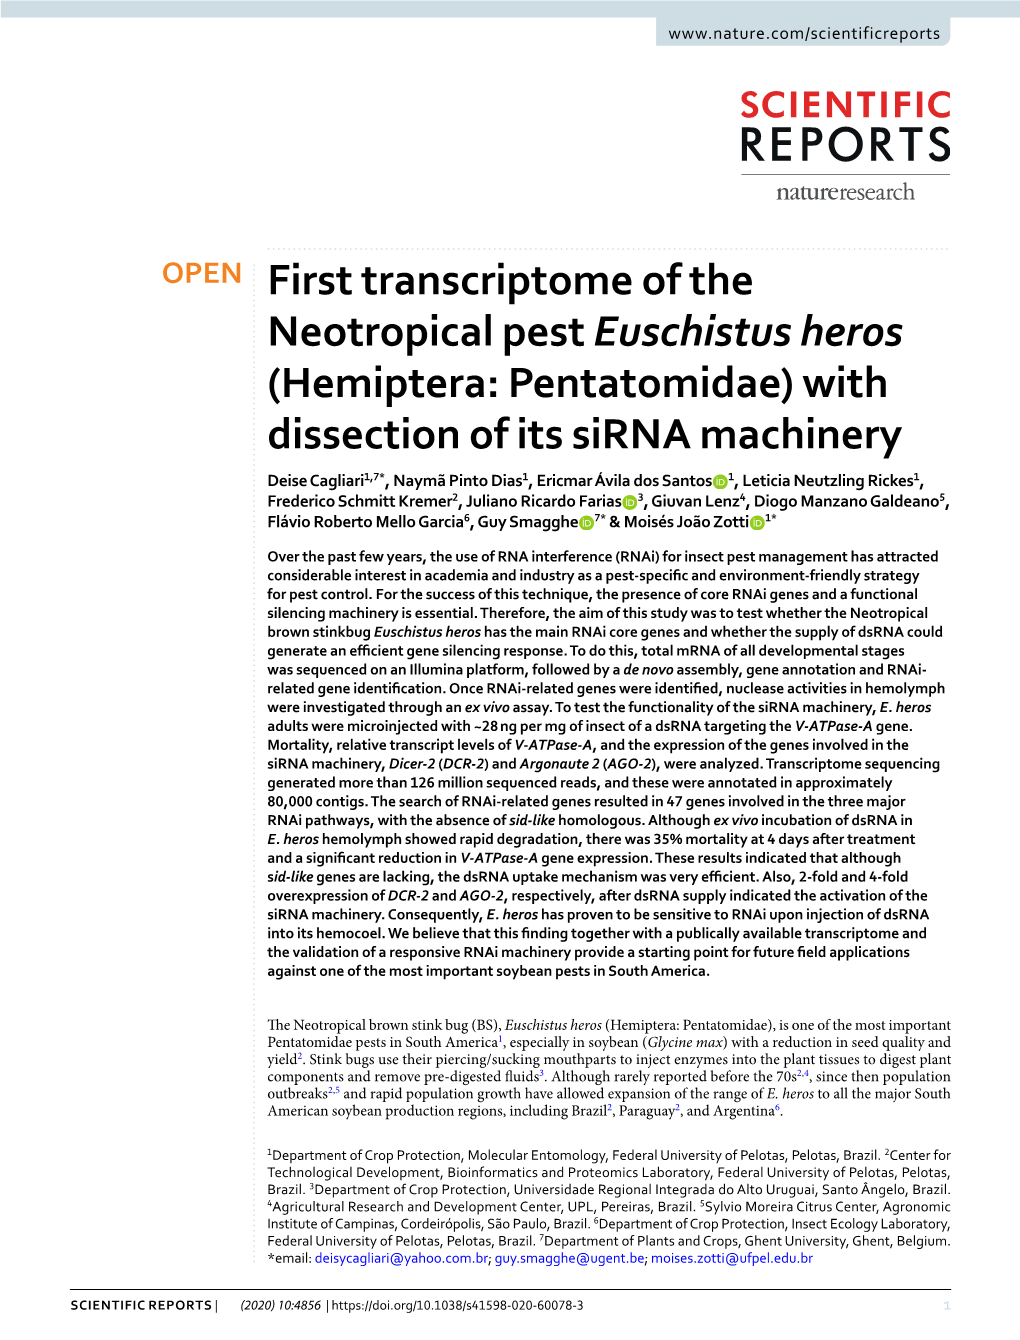 First Transcriptome of the Neotropical Pest Euschistus Heros (Hemiptera